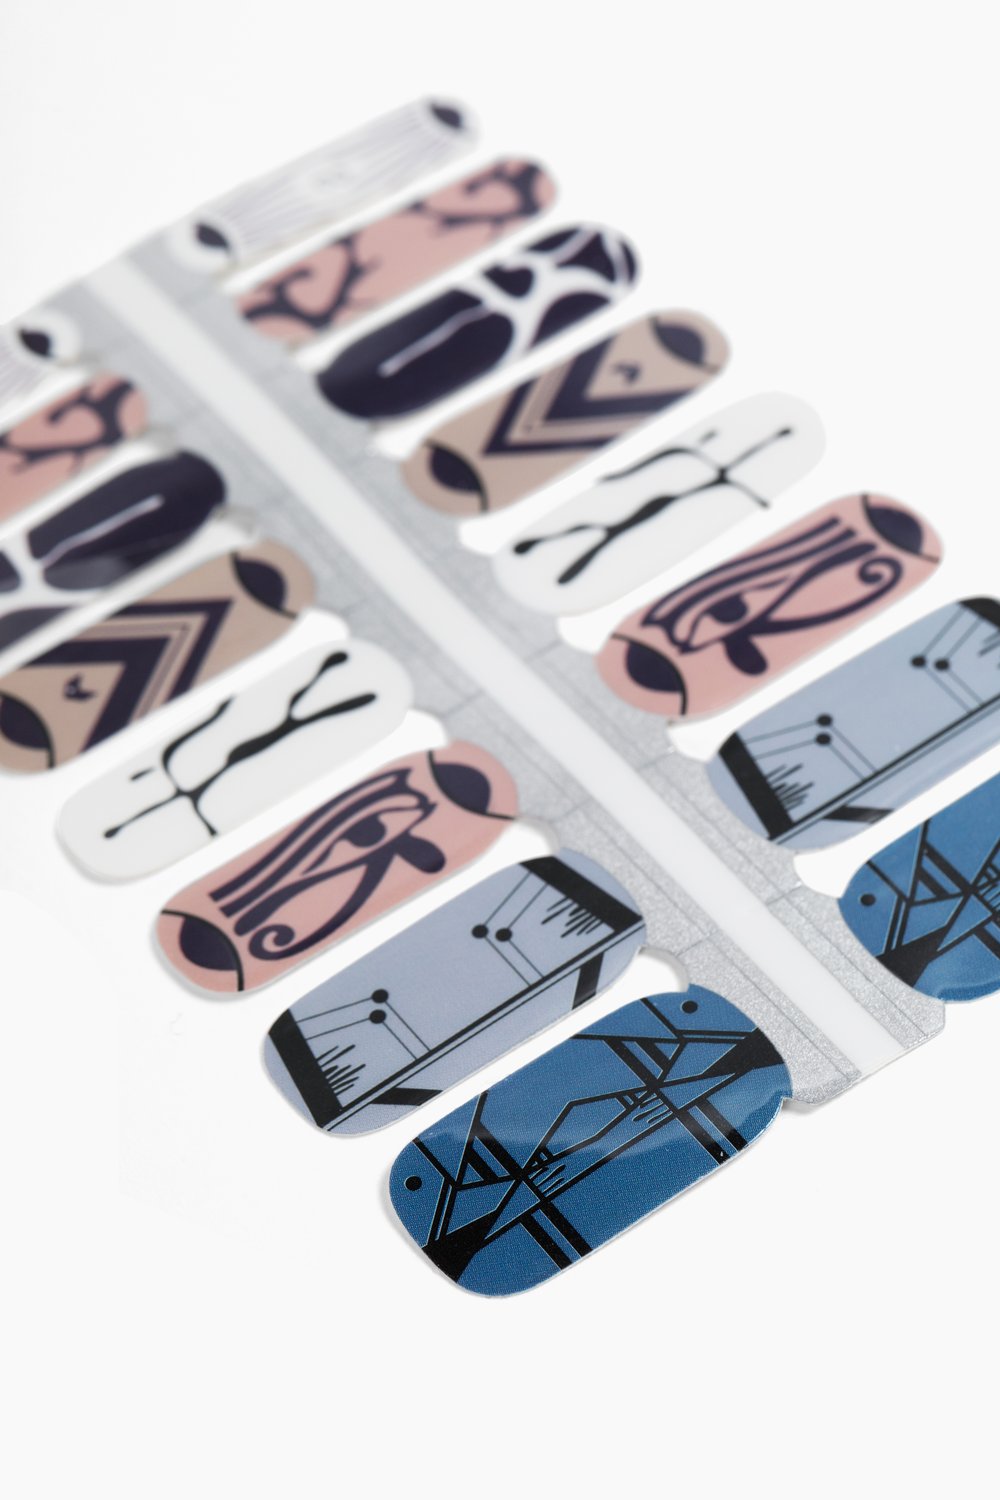 Designer Label Nail Sticker – LORD MUCK PROFESSIONAL